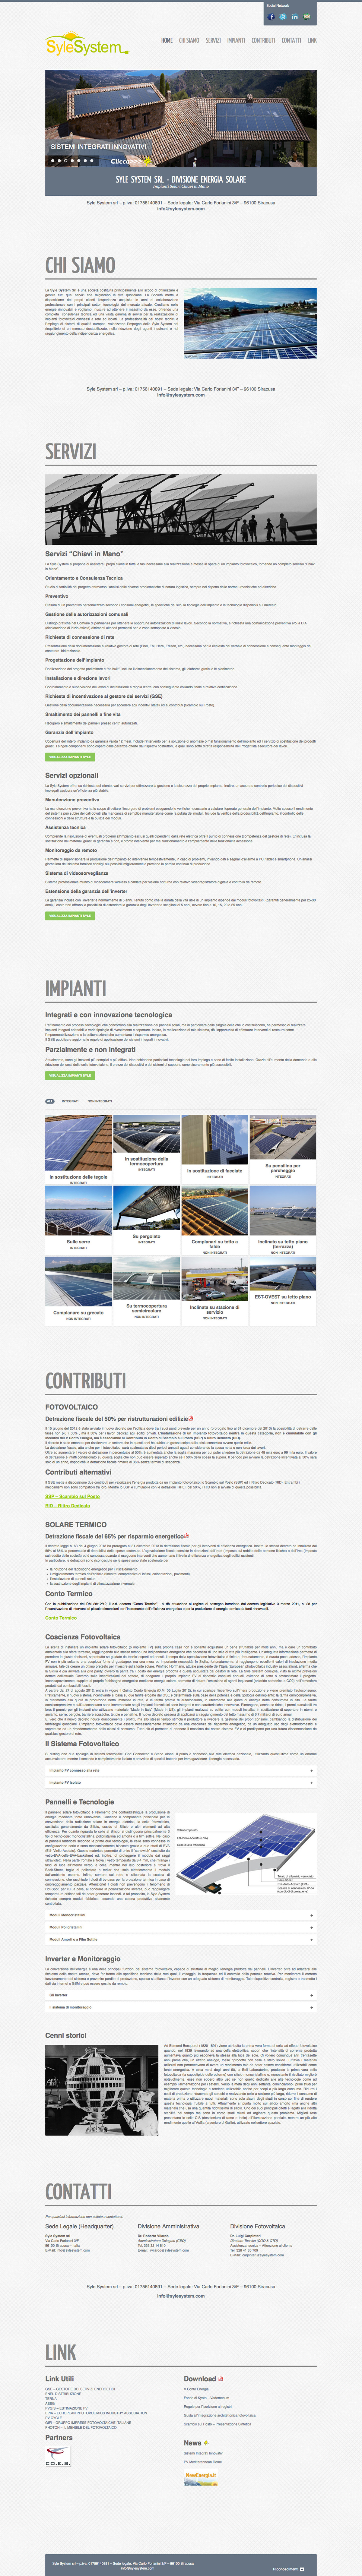 sylesystem photovoltaic Website wordpress css HTML Responsive w3c